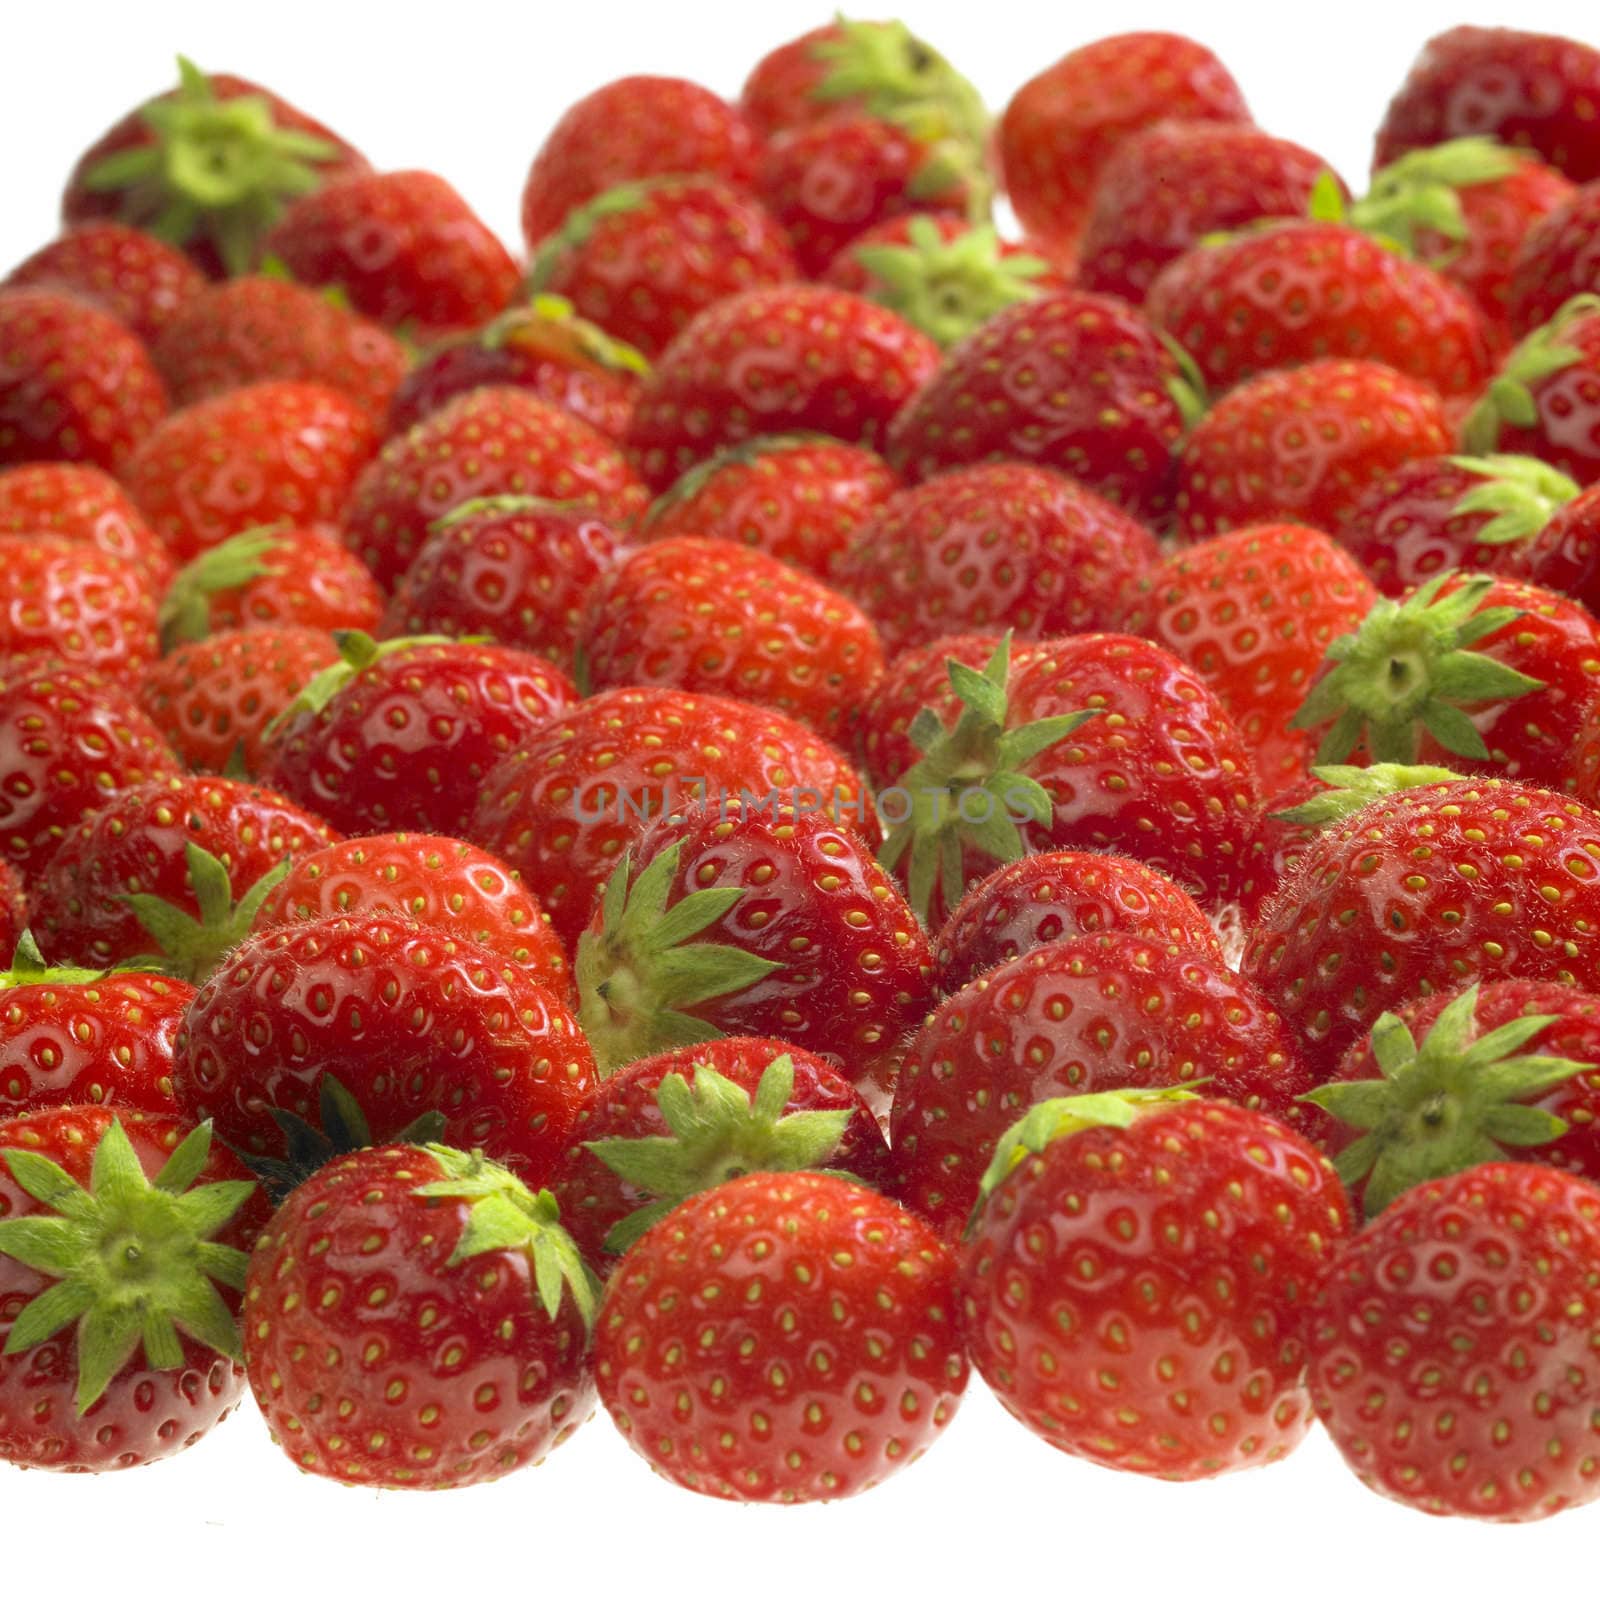 strawberries by phbcz